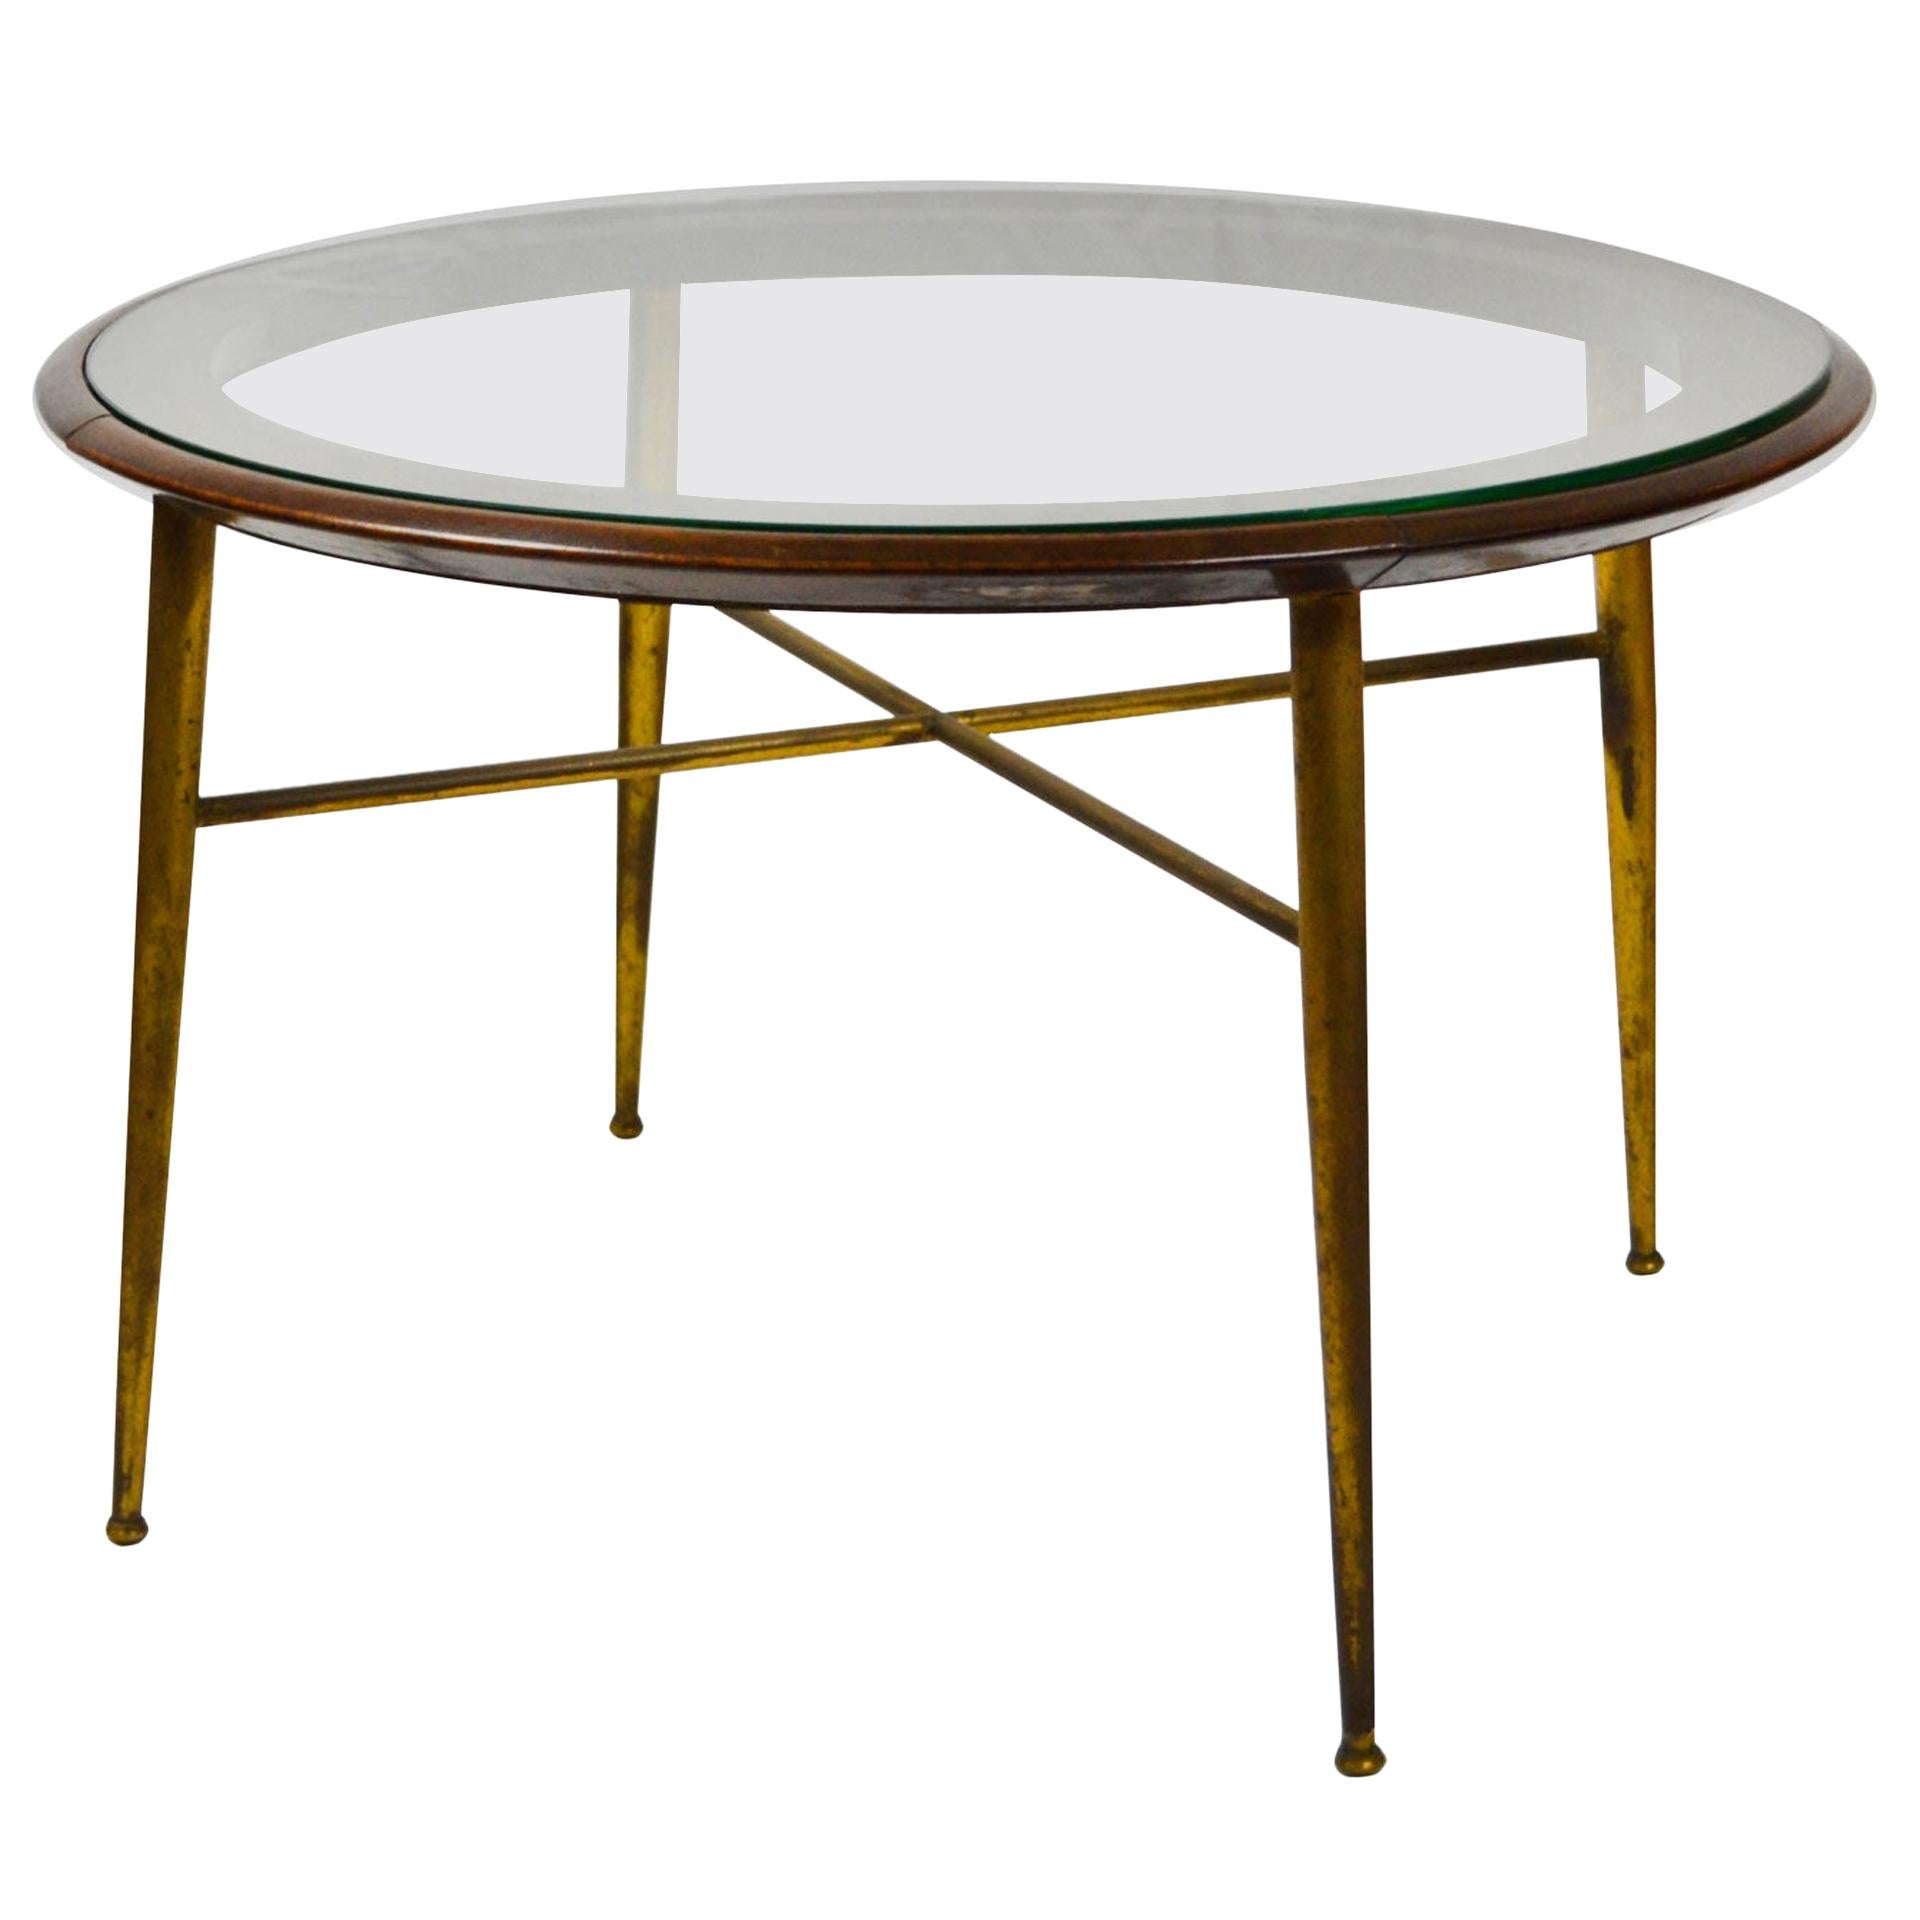 20th Century Coffee Table in Brass Wood and Circular Glass Top Italian School